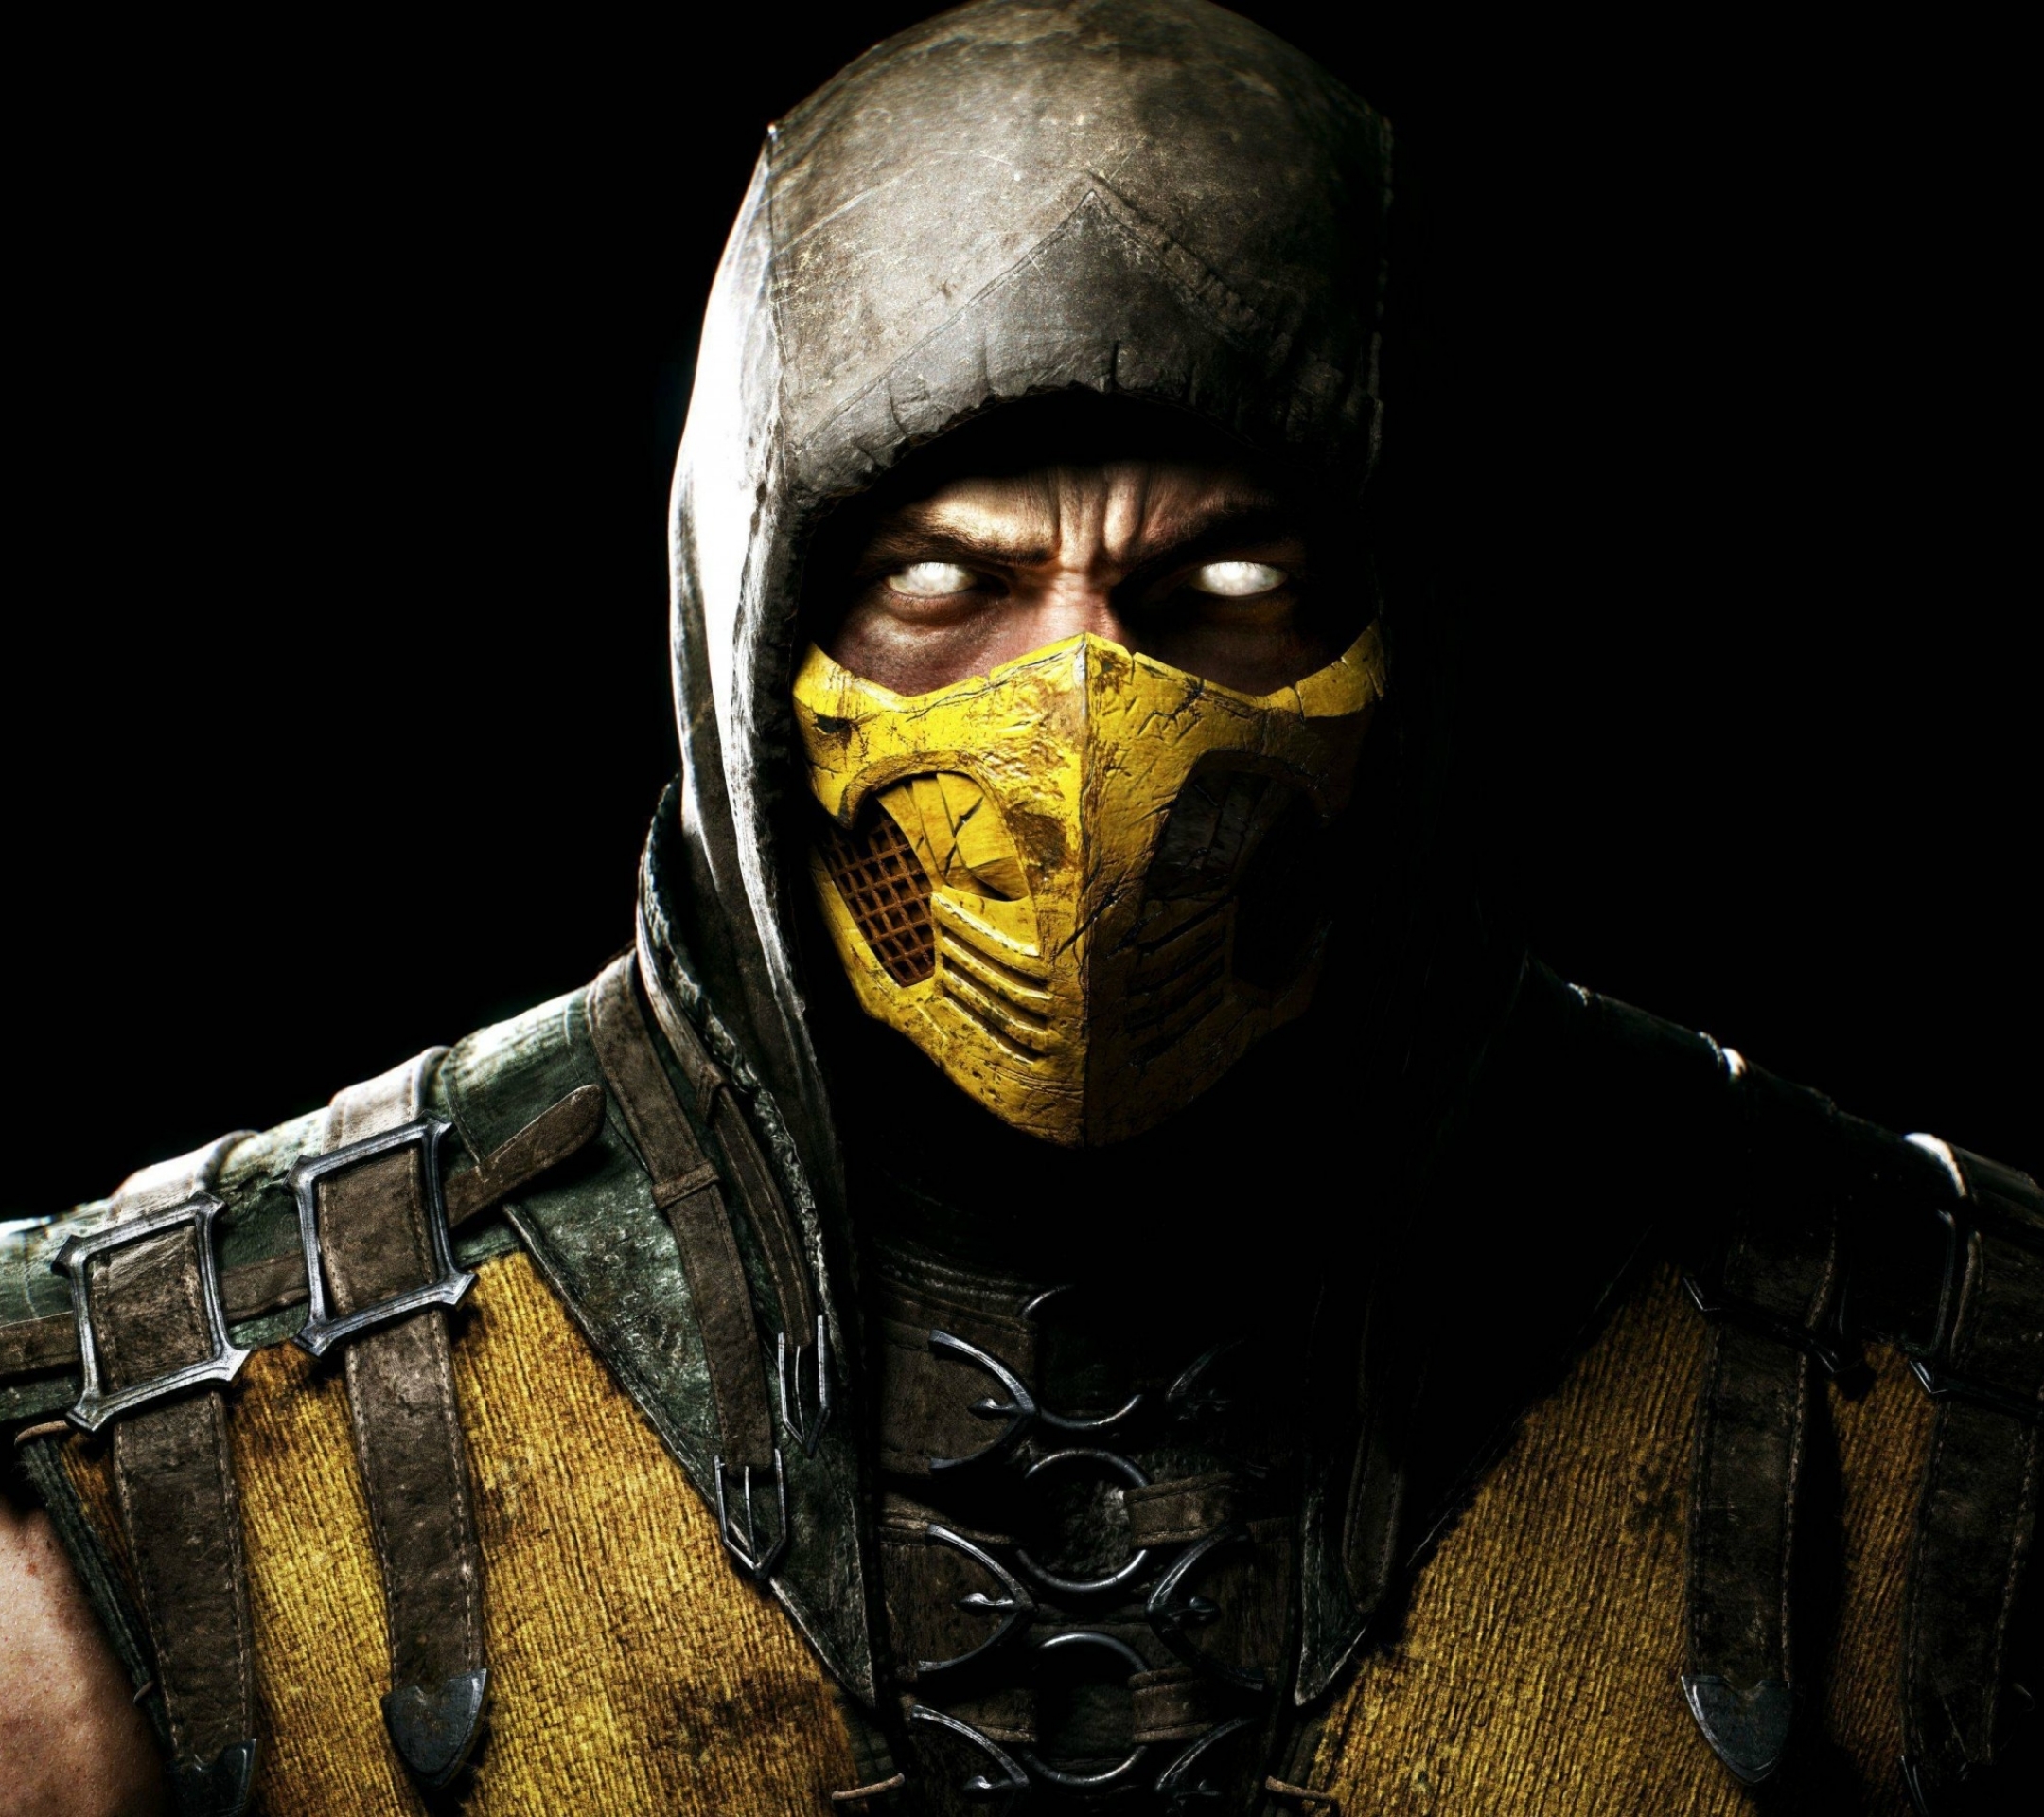 Descarga gratuita de fondo de pantalla para móvil de Mortal Kombat, Videojuego, Escorpión (Mortal Kombat), Mortal Kombat X.